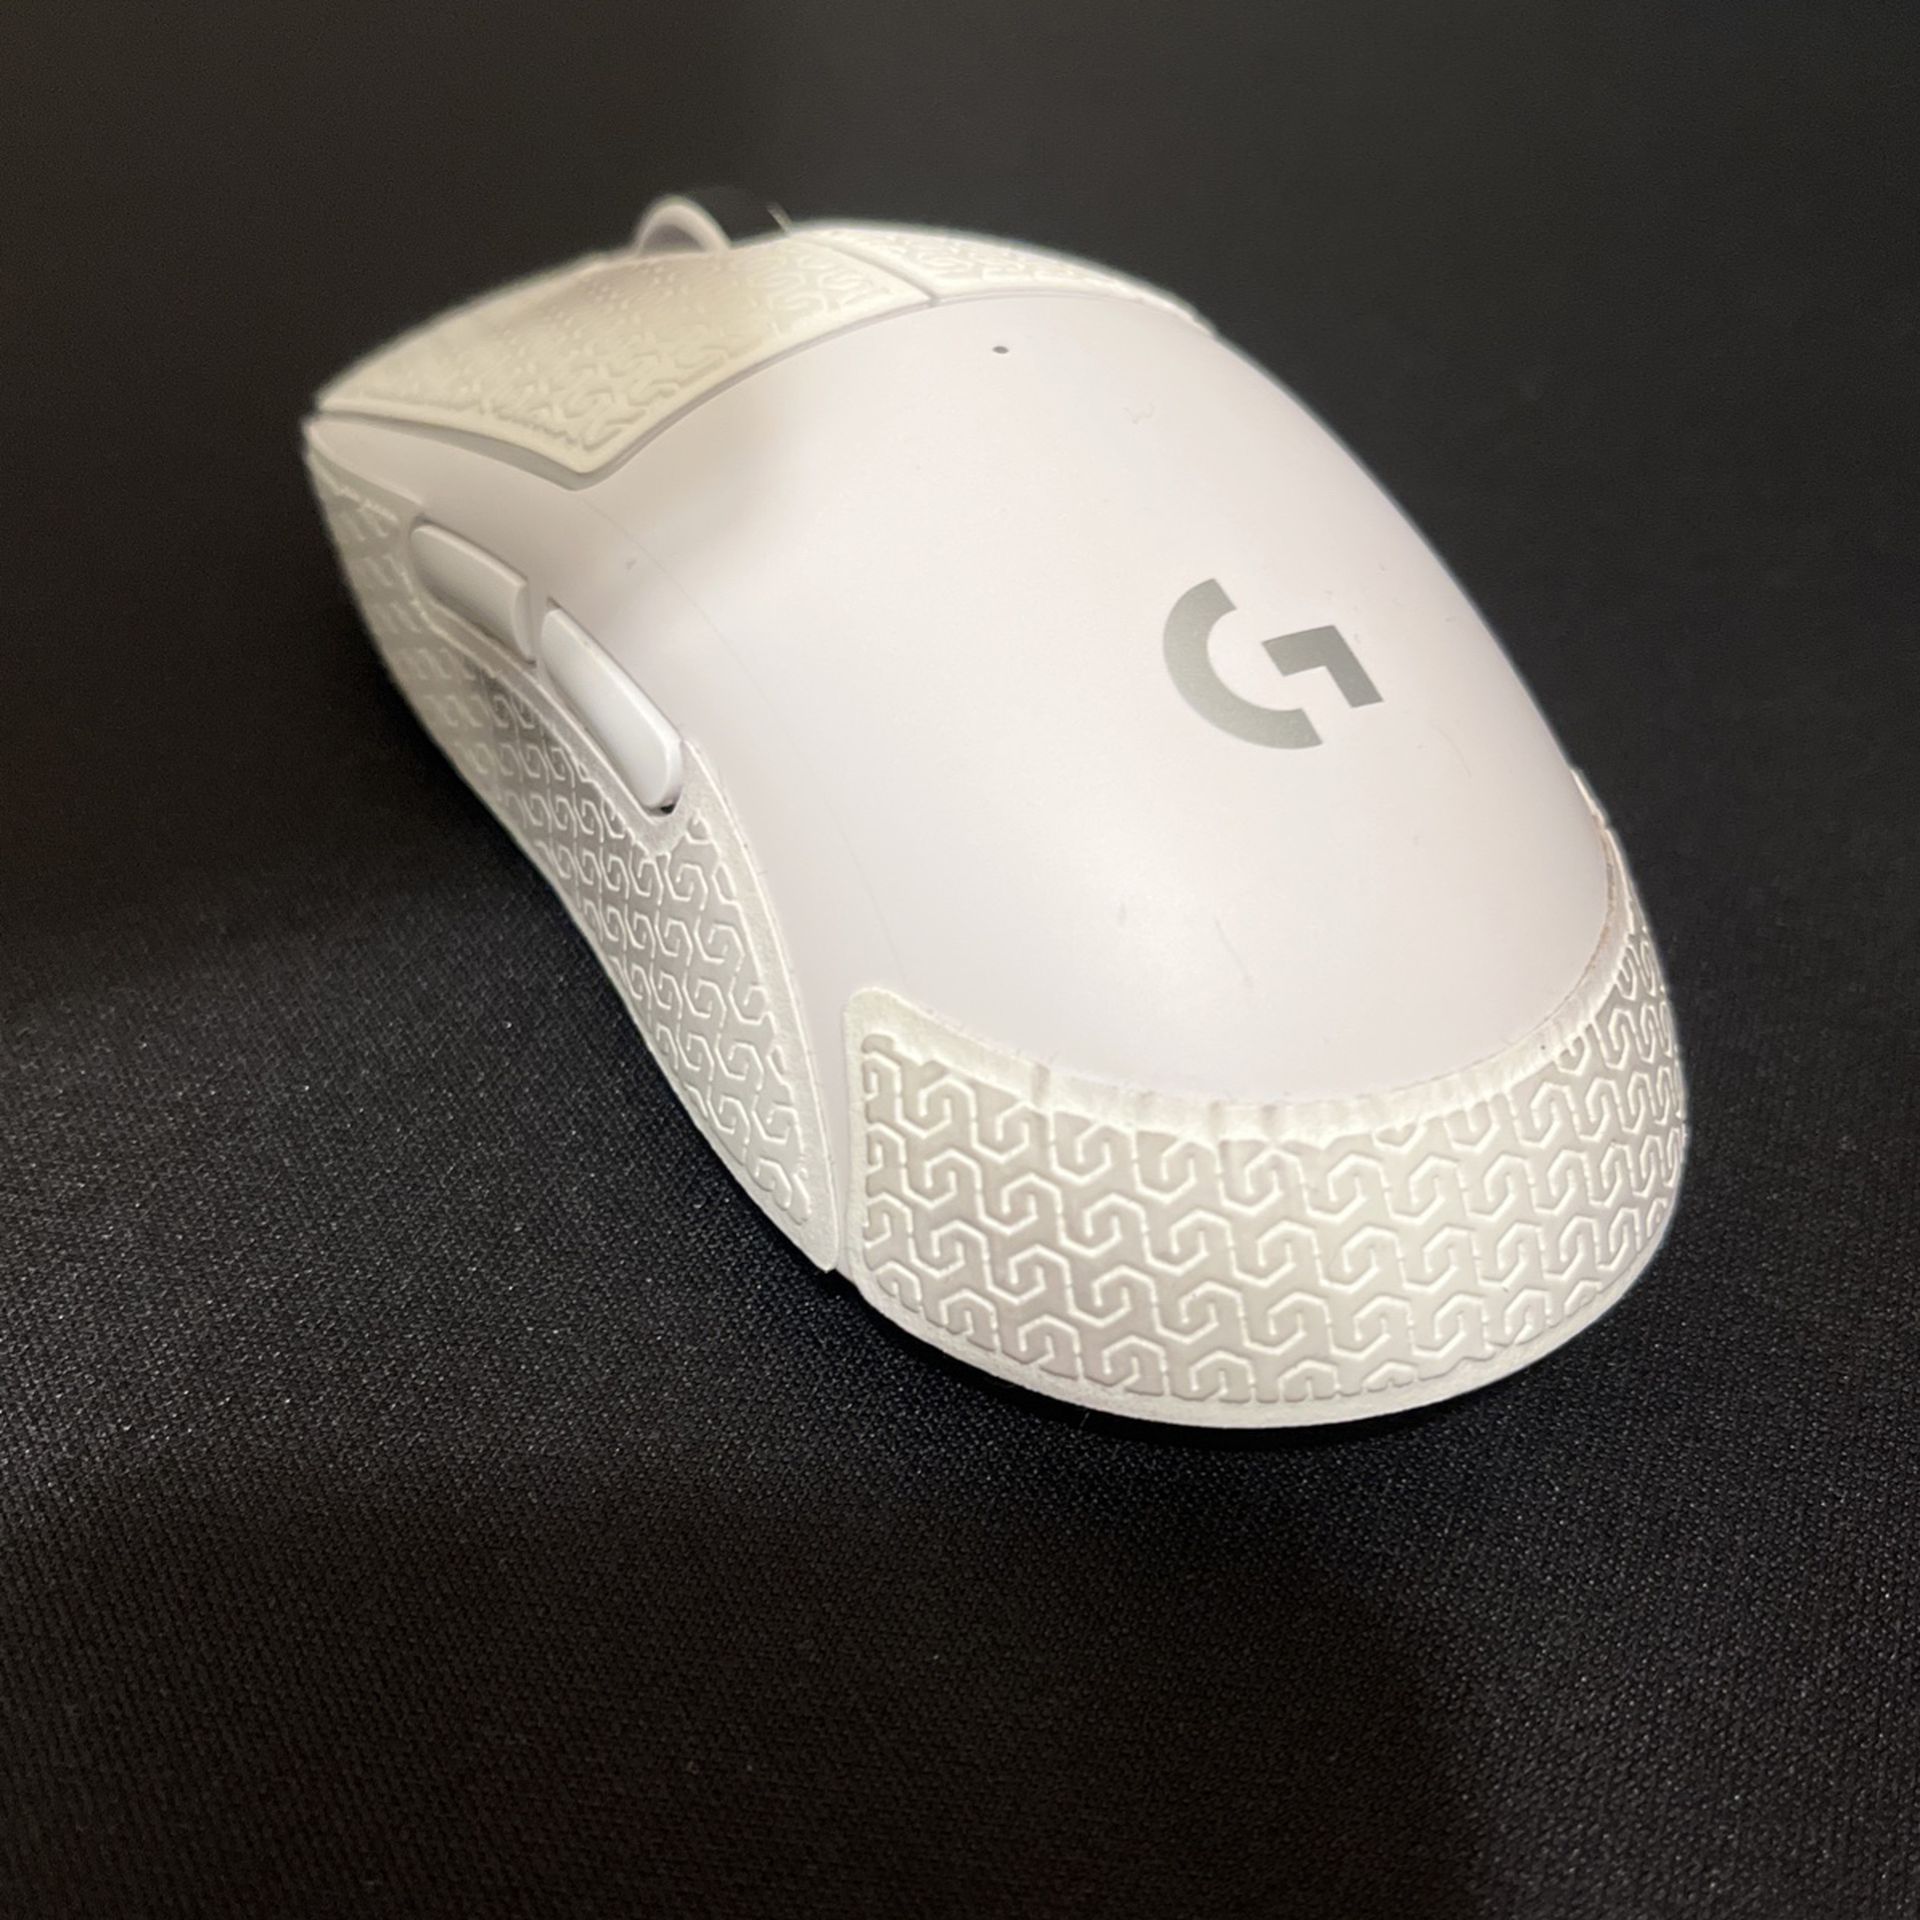 Logitech GPro Superlight wireless Mouse